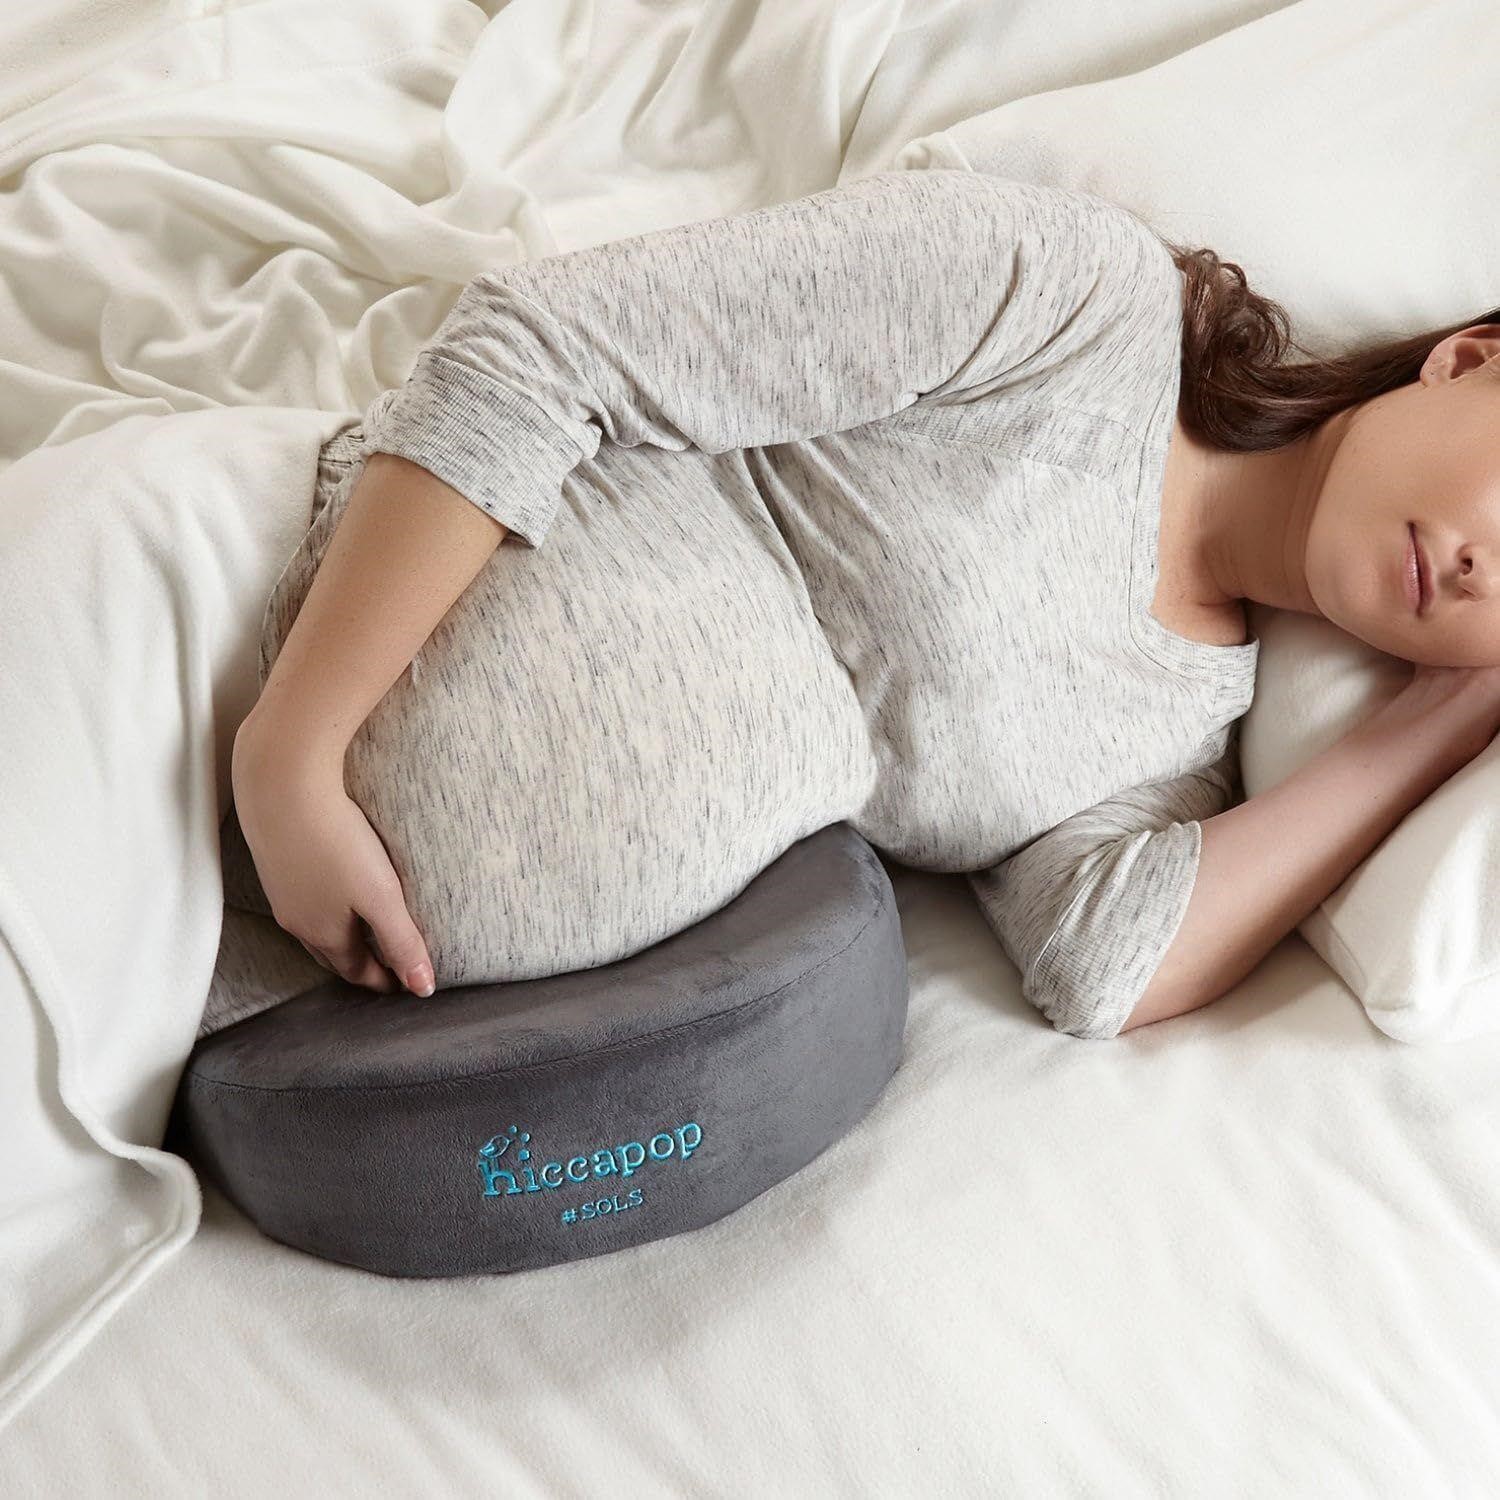 Pregnancy Body Wedge Pillow